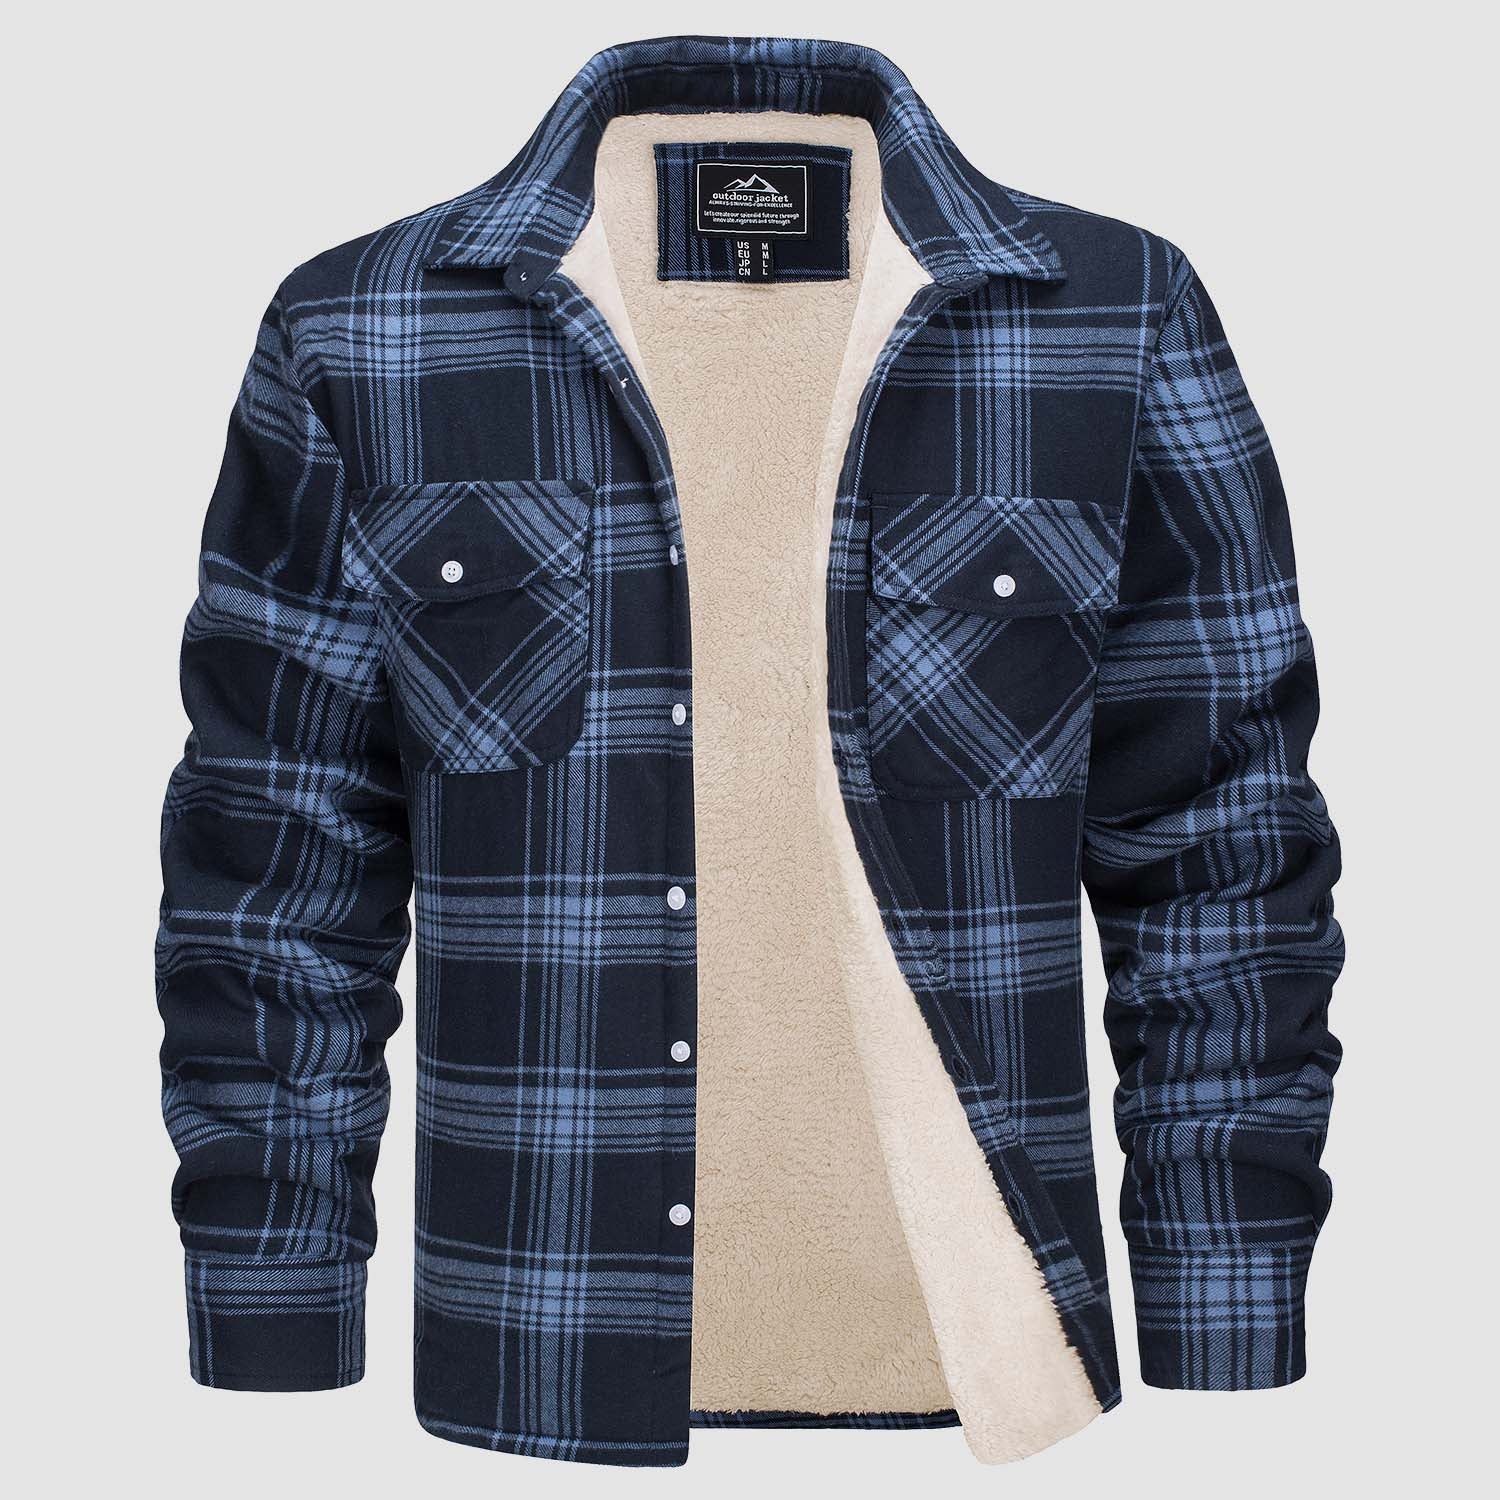 Men's Sherpa Fleece Lined Shirt Casual Plaid Shirt Jacket – MAGCOMSEN